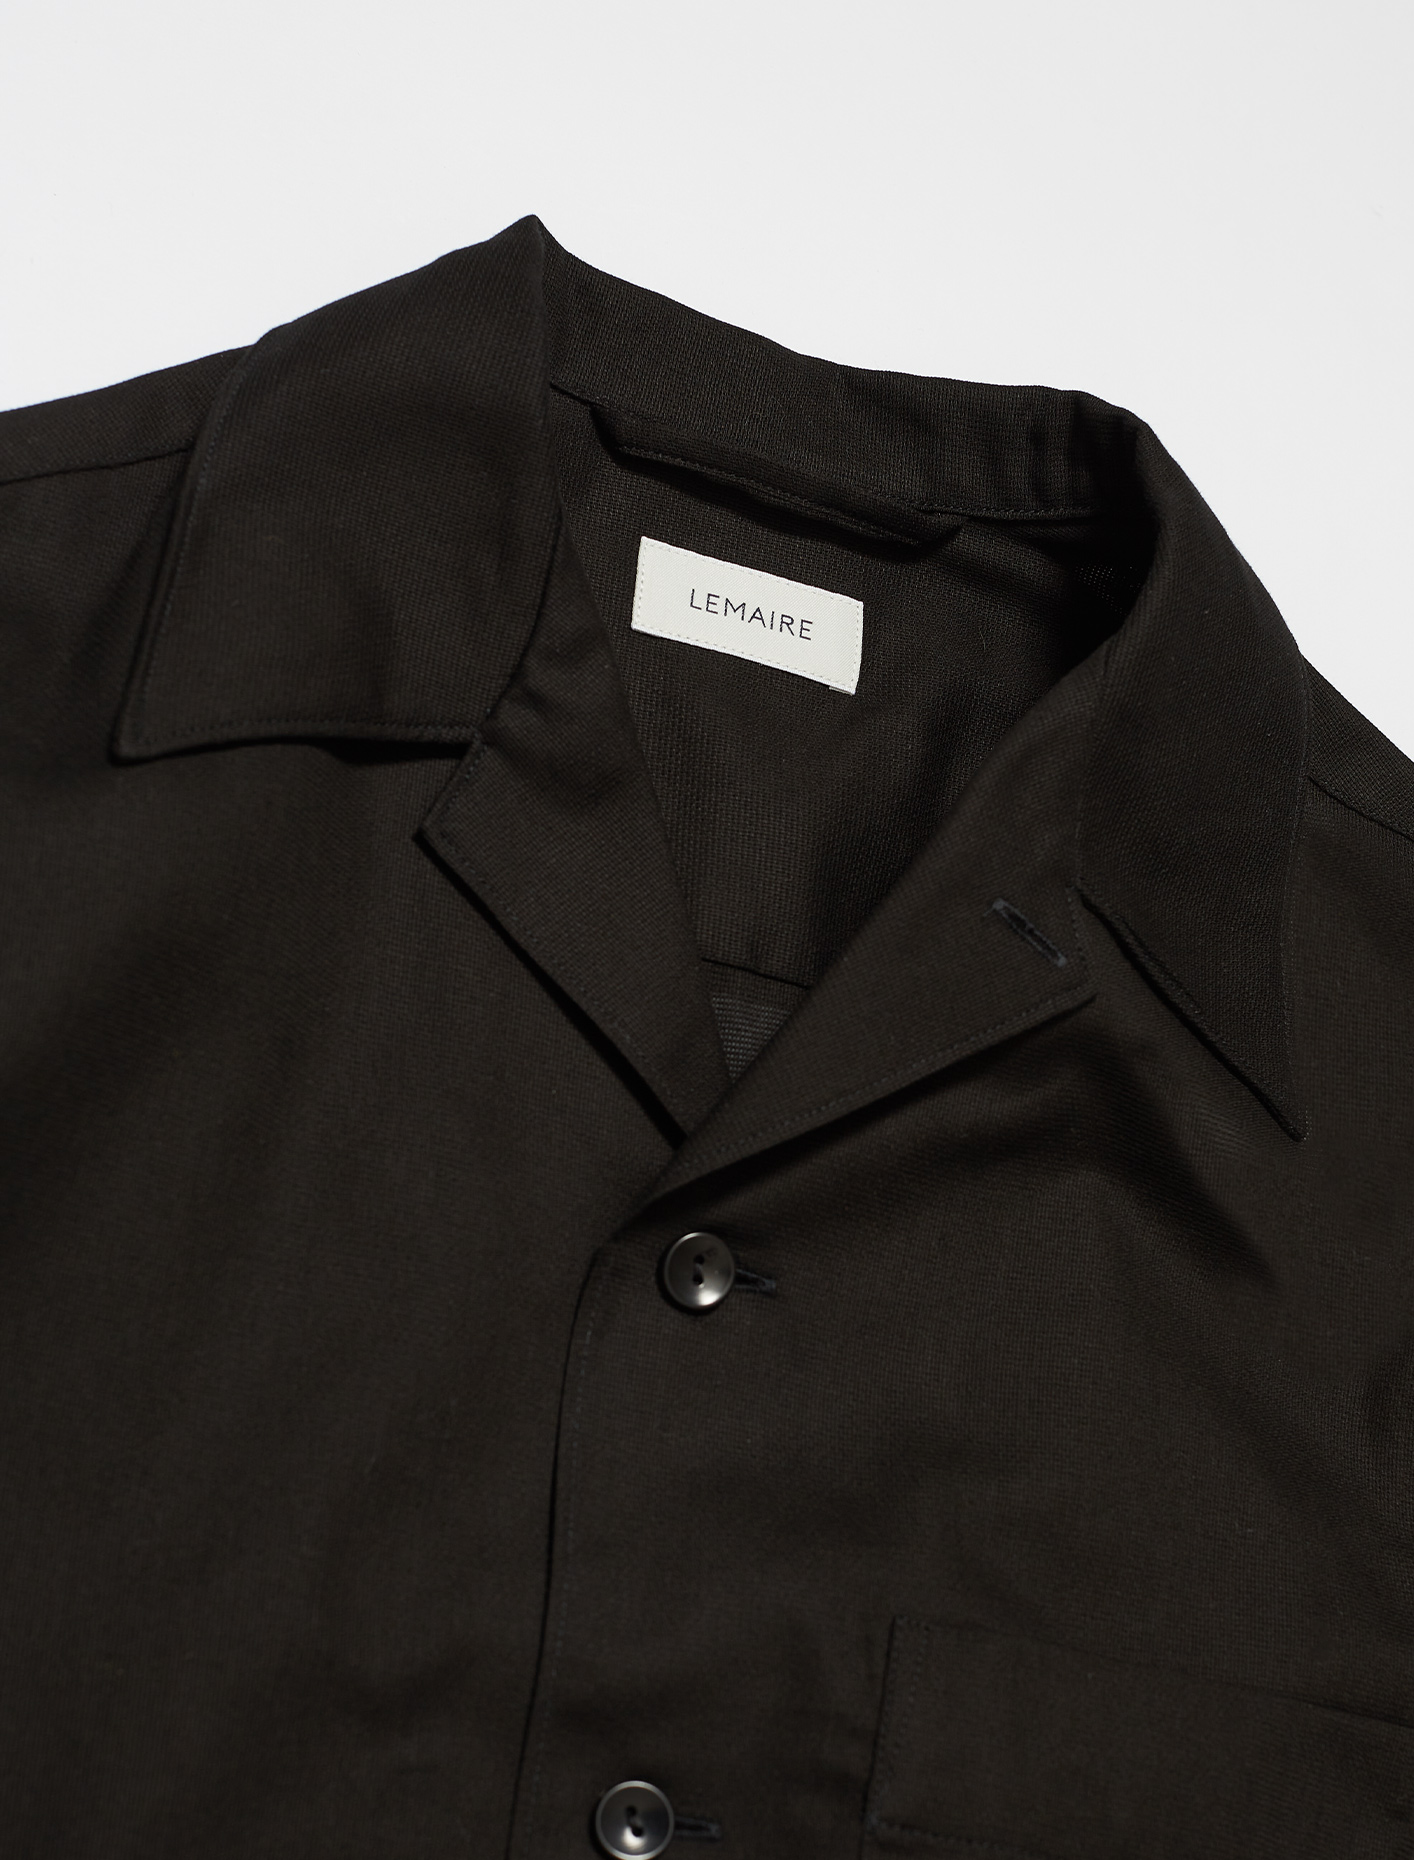 Lemaire Short Sleeve Shirt in Black | Voo Store Berlin | Worldwide Shipping